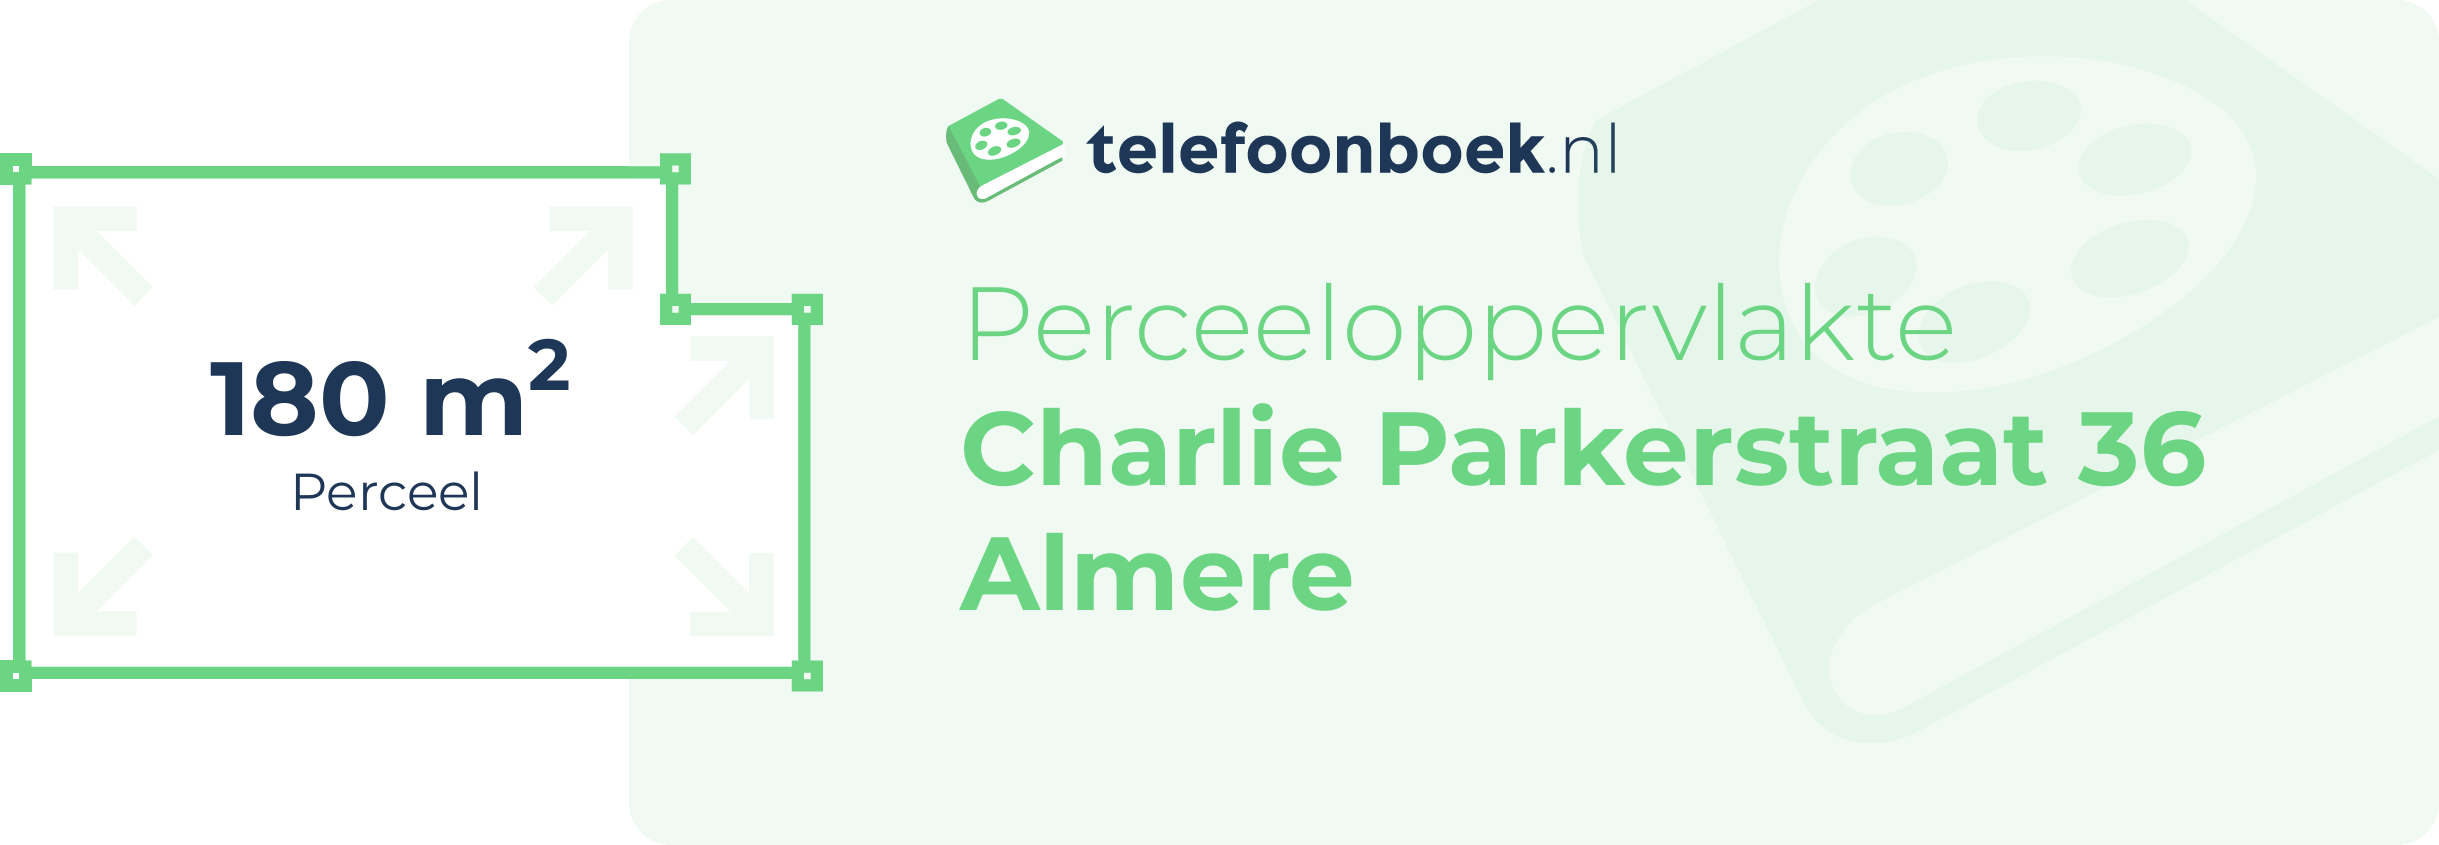 Perceeloppervlakte Charlie Parkerstraat 36 Almere